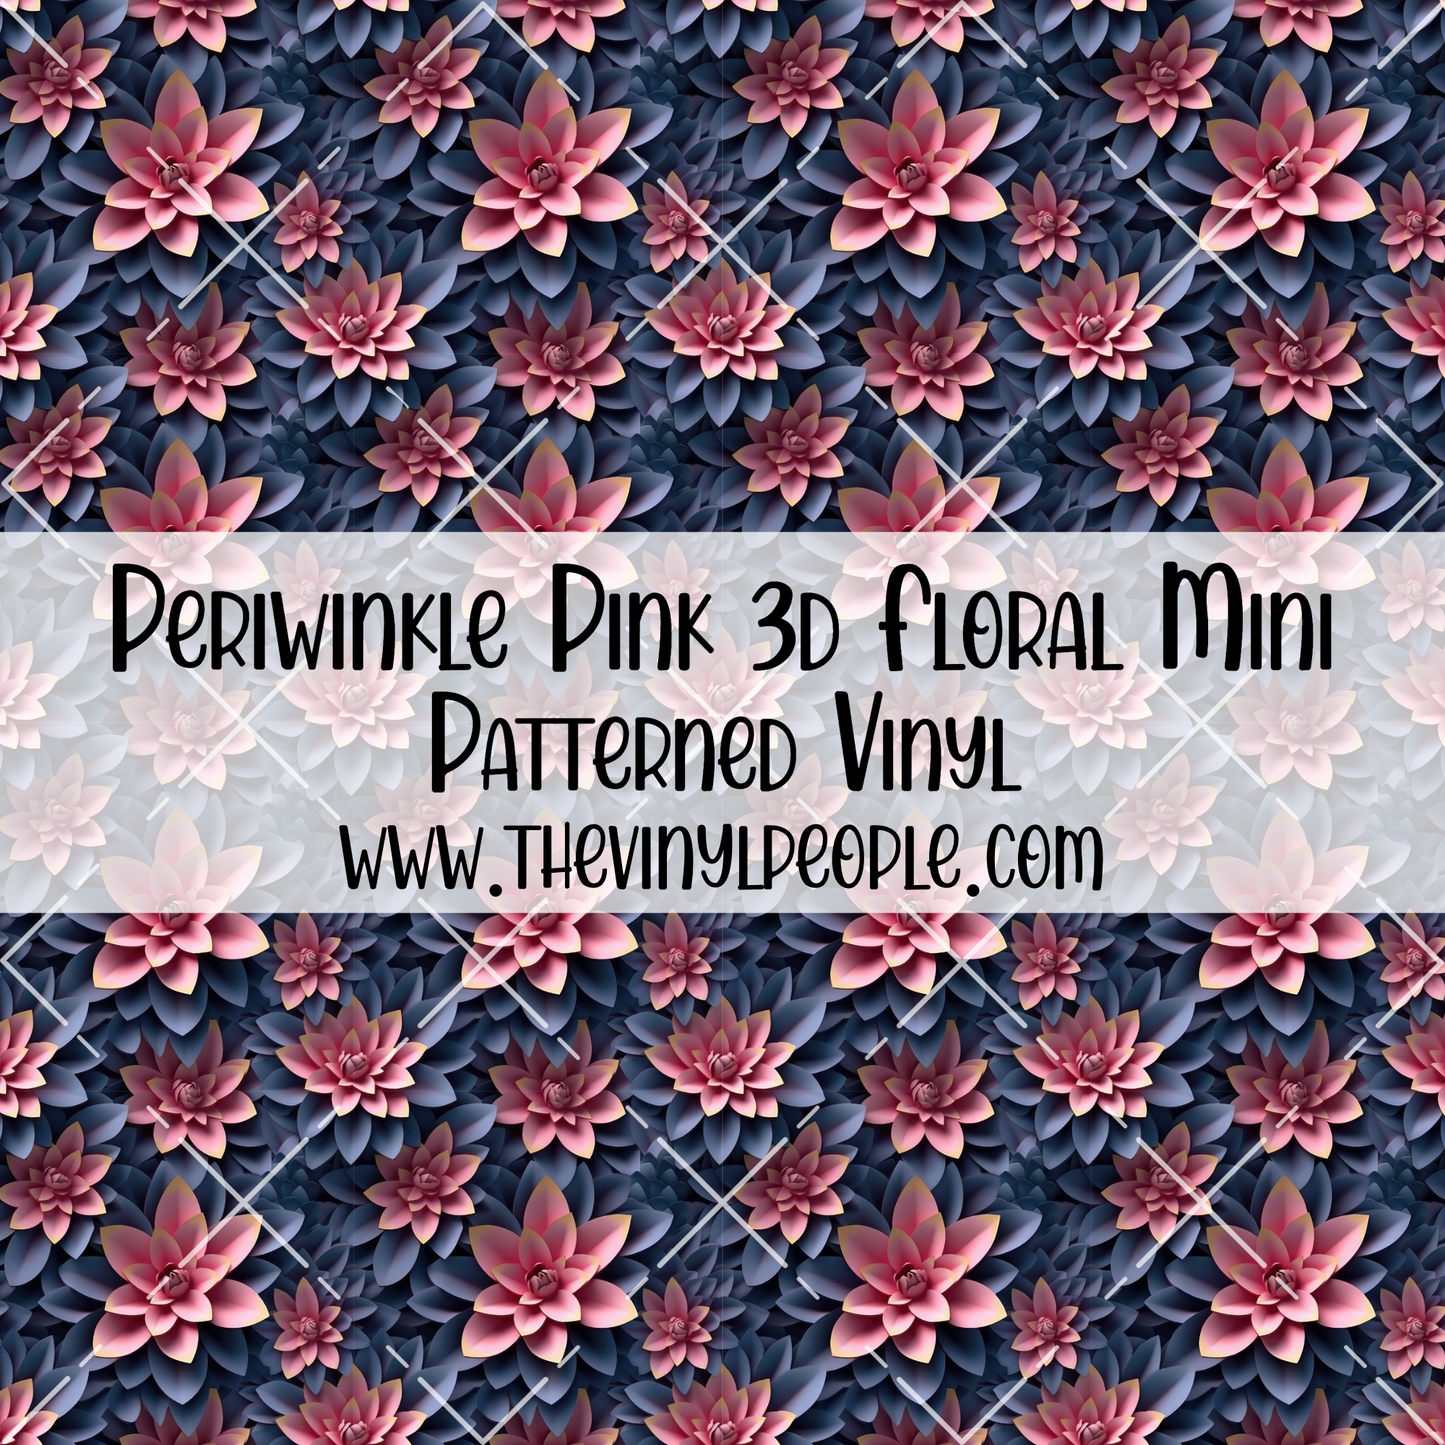 Periwinkle Pink 3D Floral Patterned Vinyl